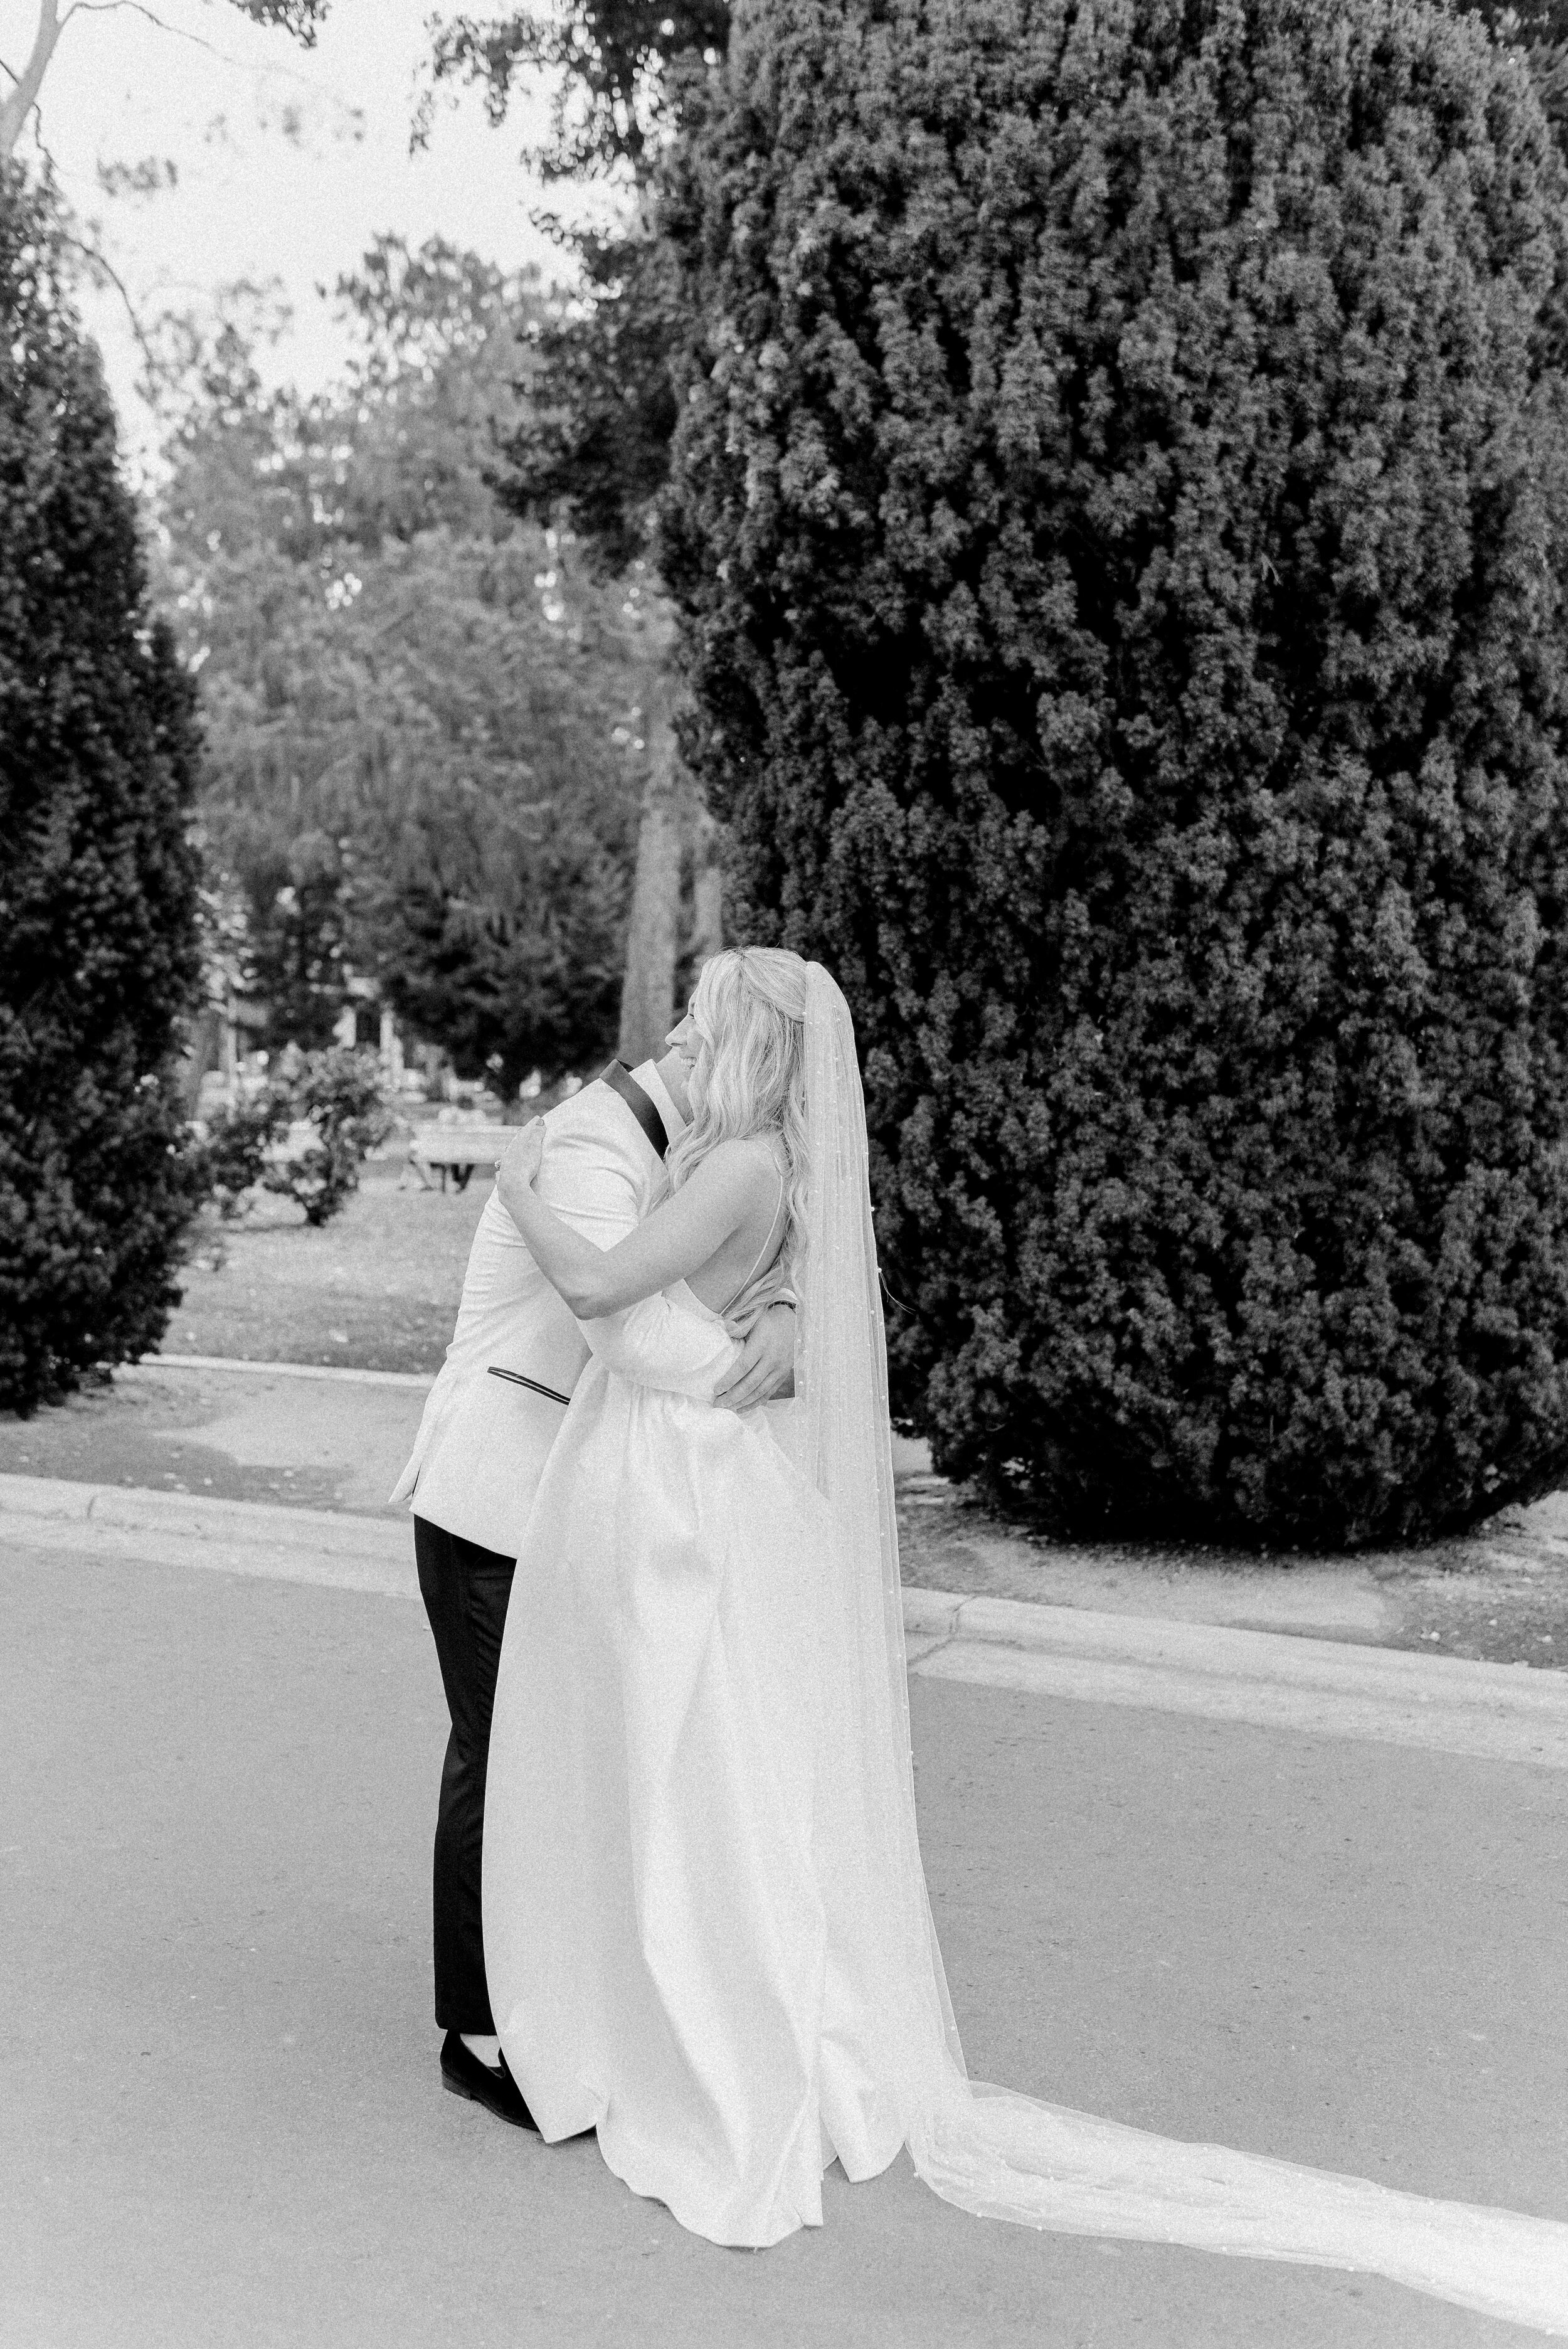  Vagabond Aquarius wedding dress for Kaelyn and Nick’s Sacramento wedding photographed by Denise Apgar Photography 